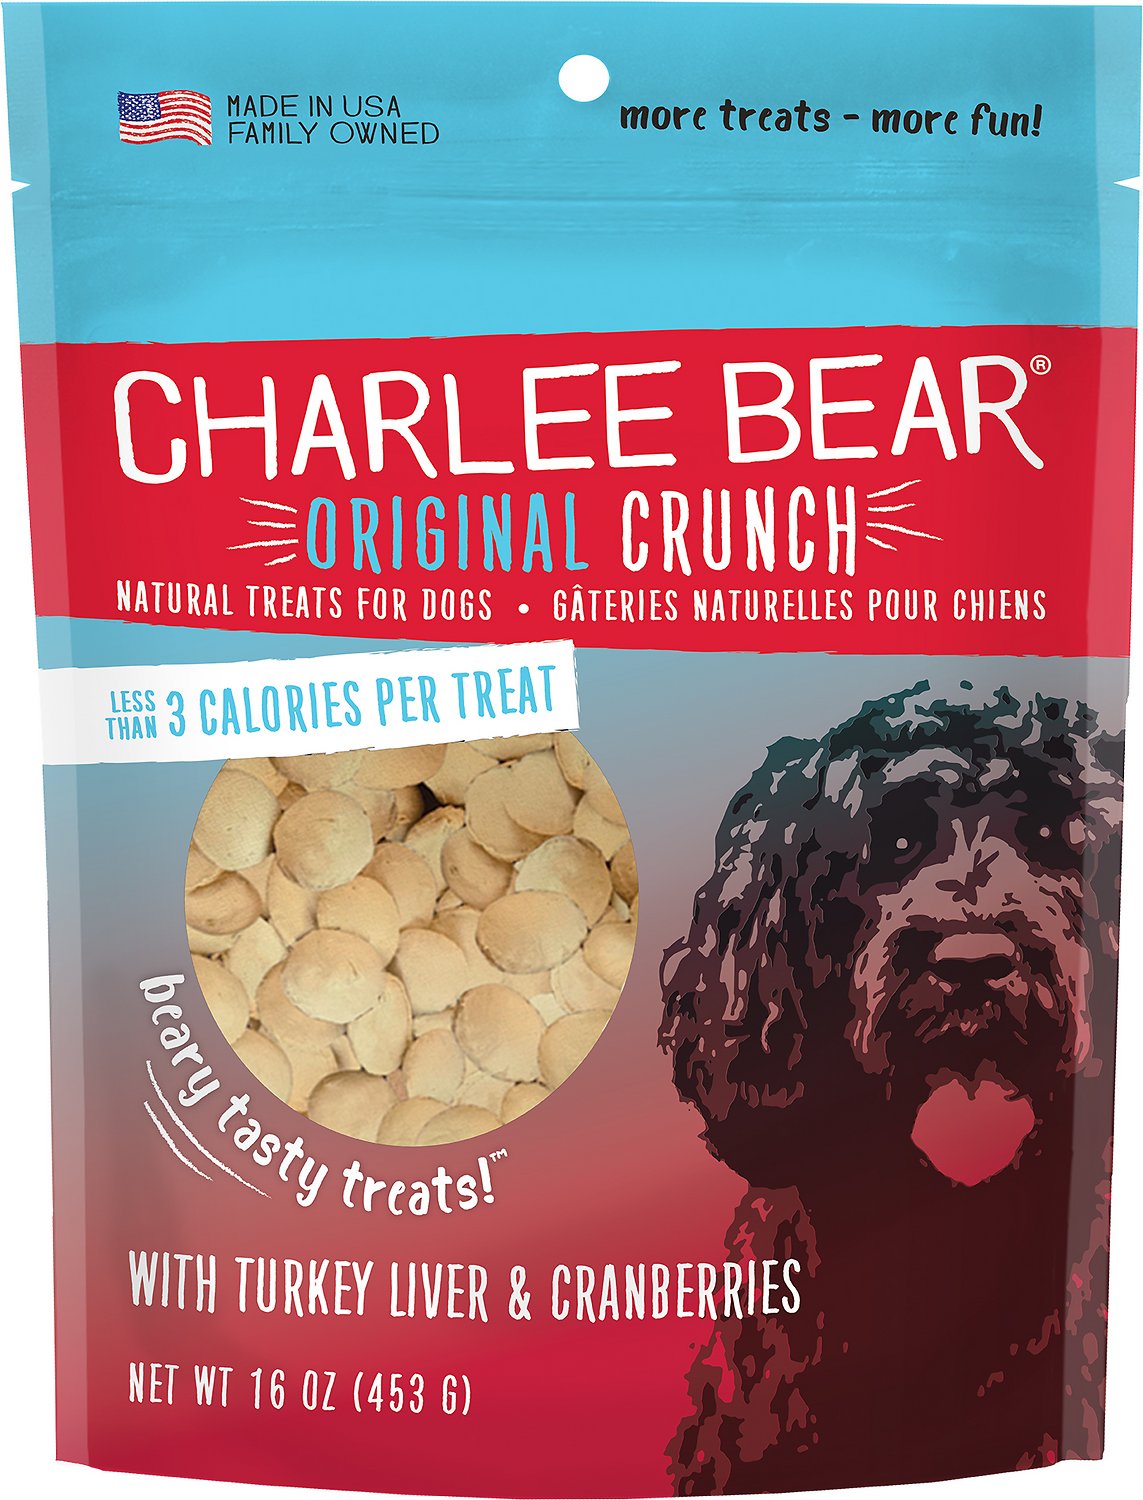 Charlee Bear Dog Treats with Turkey Liver & Cranberries 16 Oz